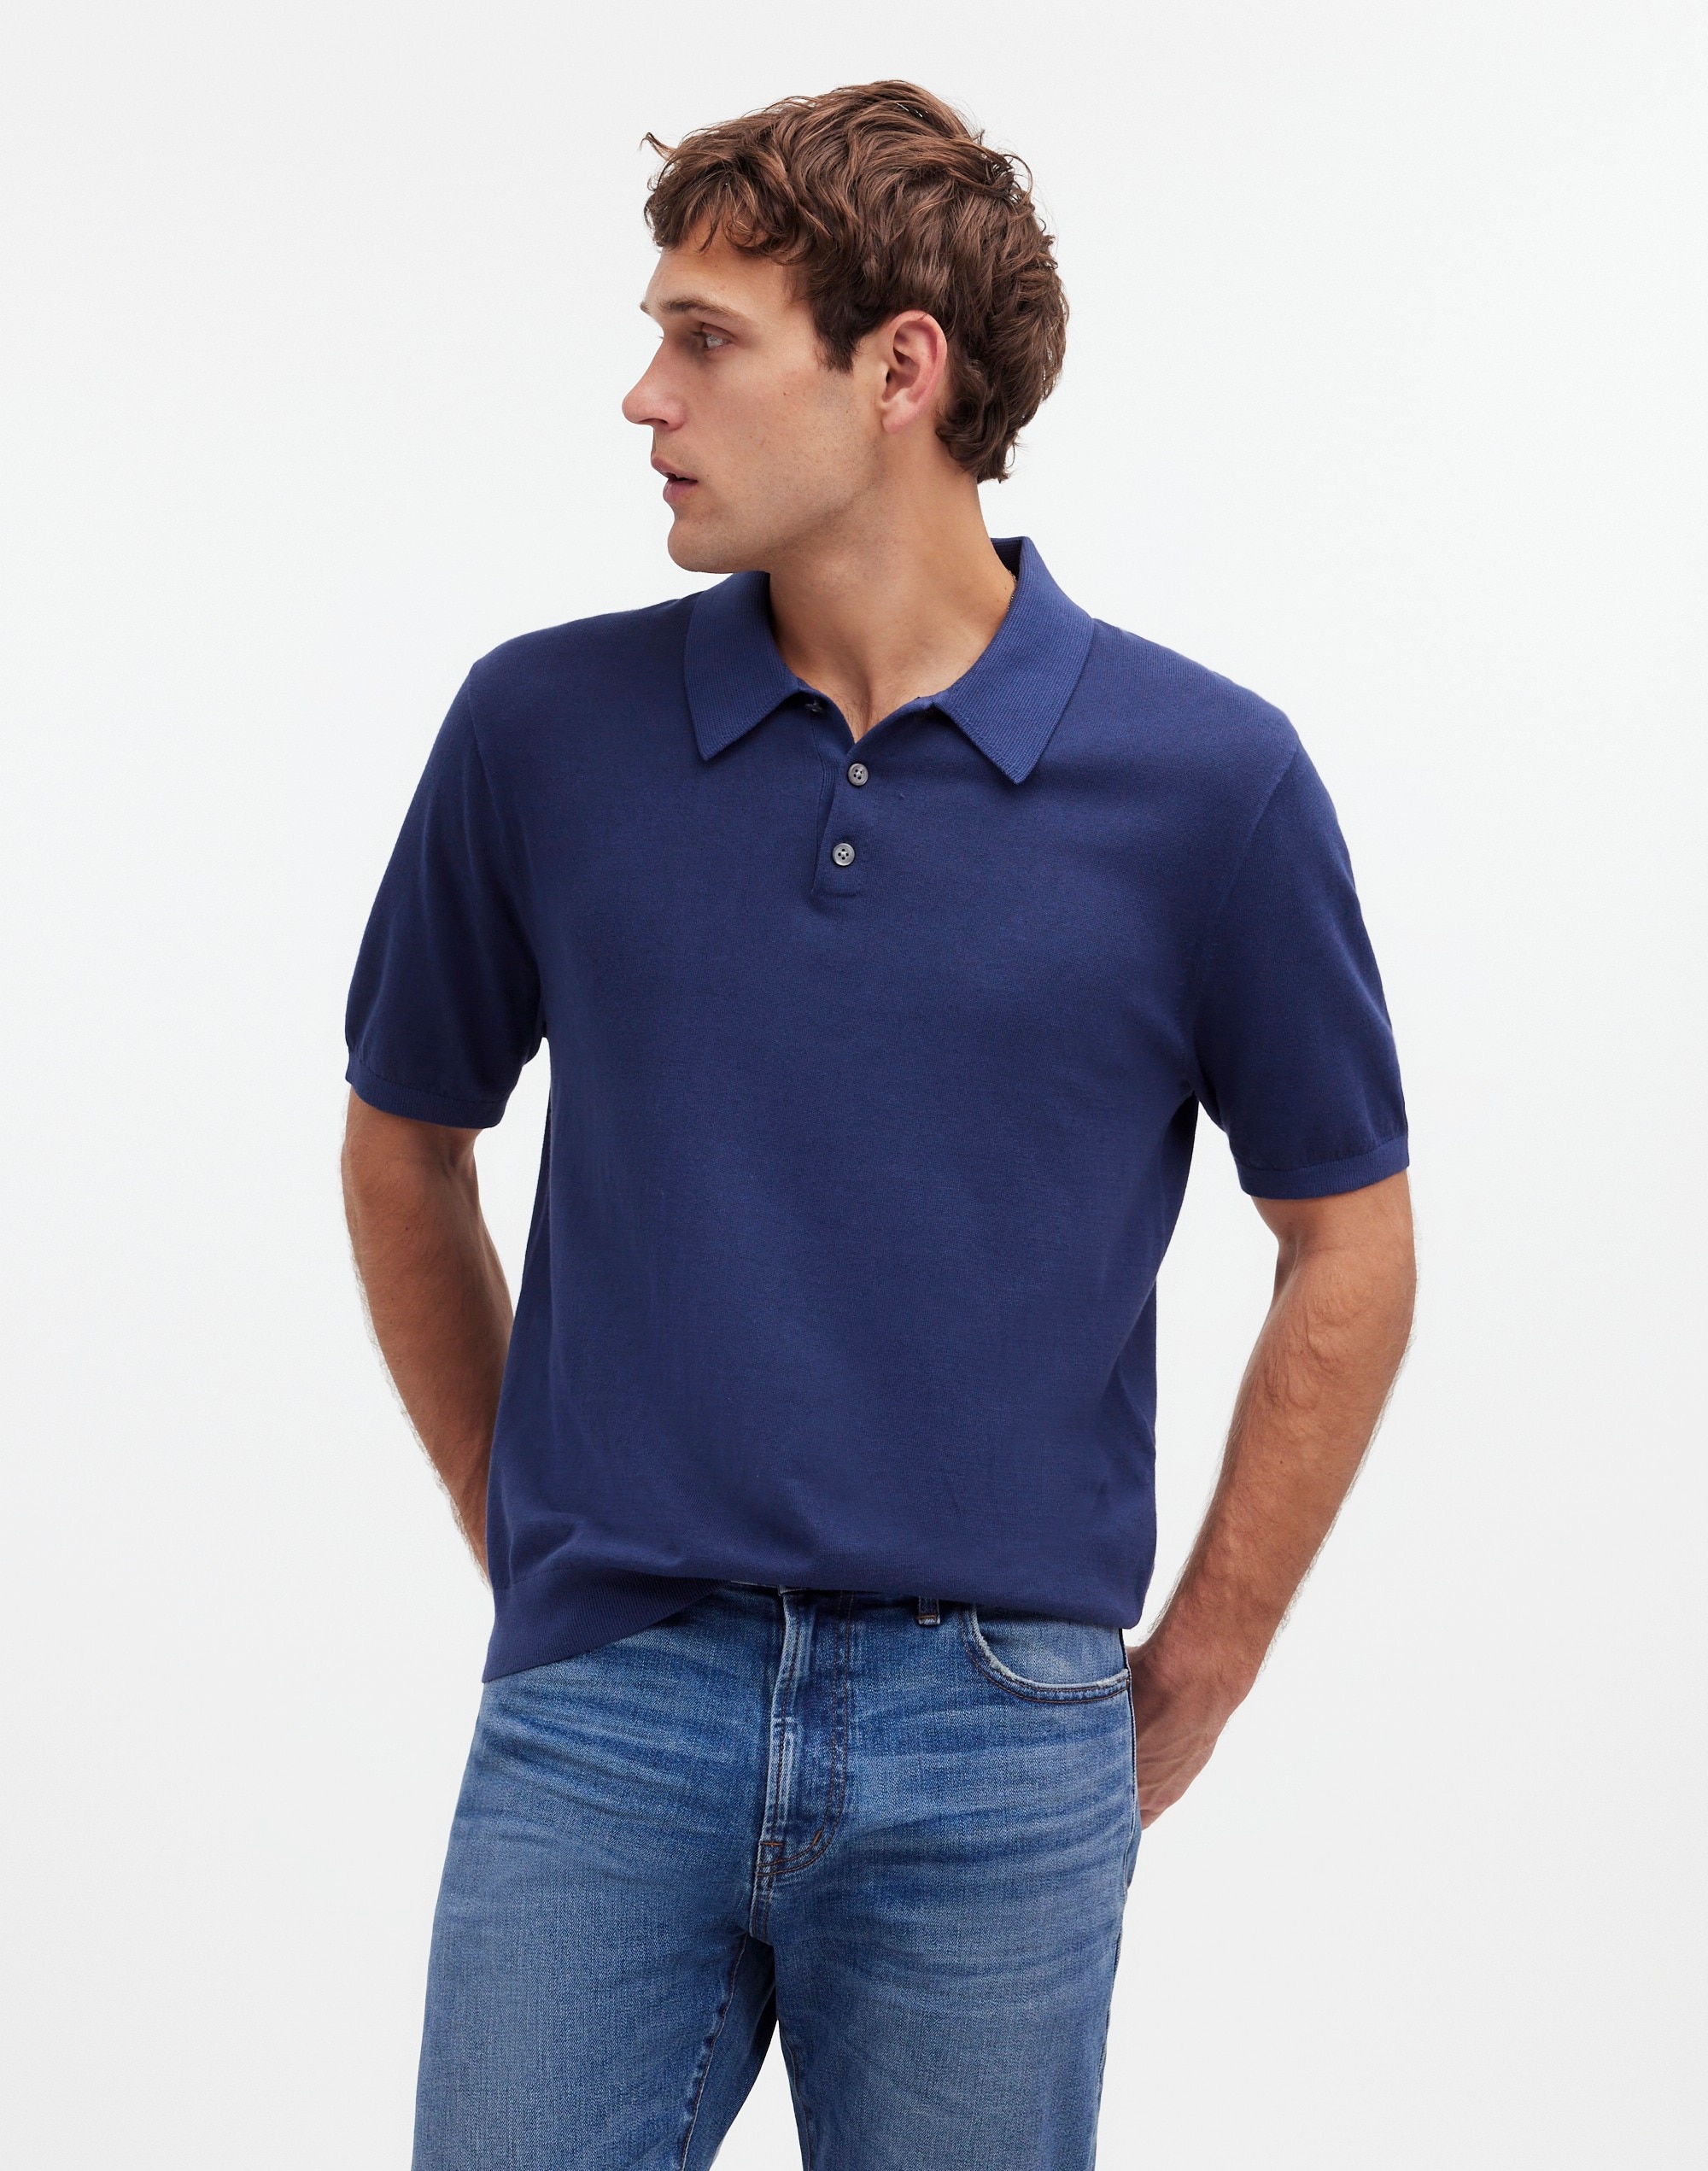 Three-Button Sweater Polo Shirt Garment Dye